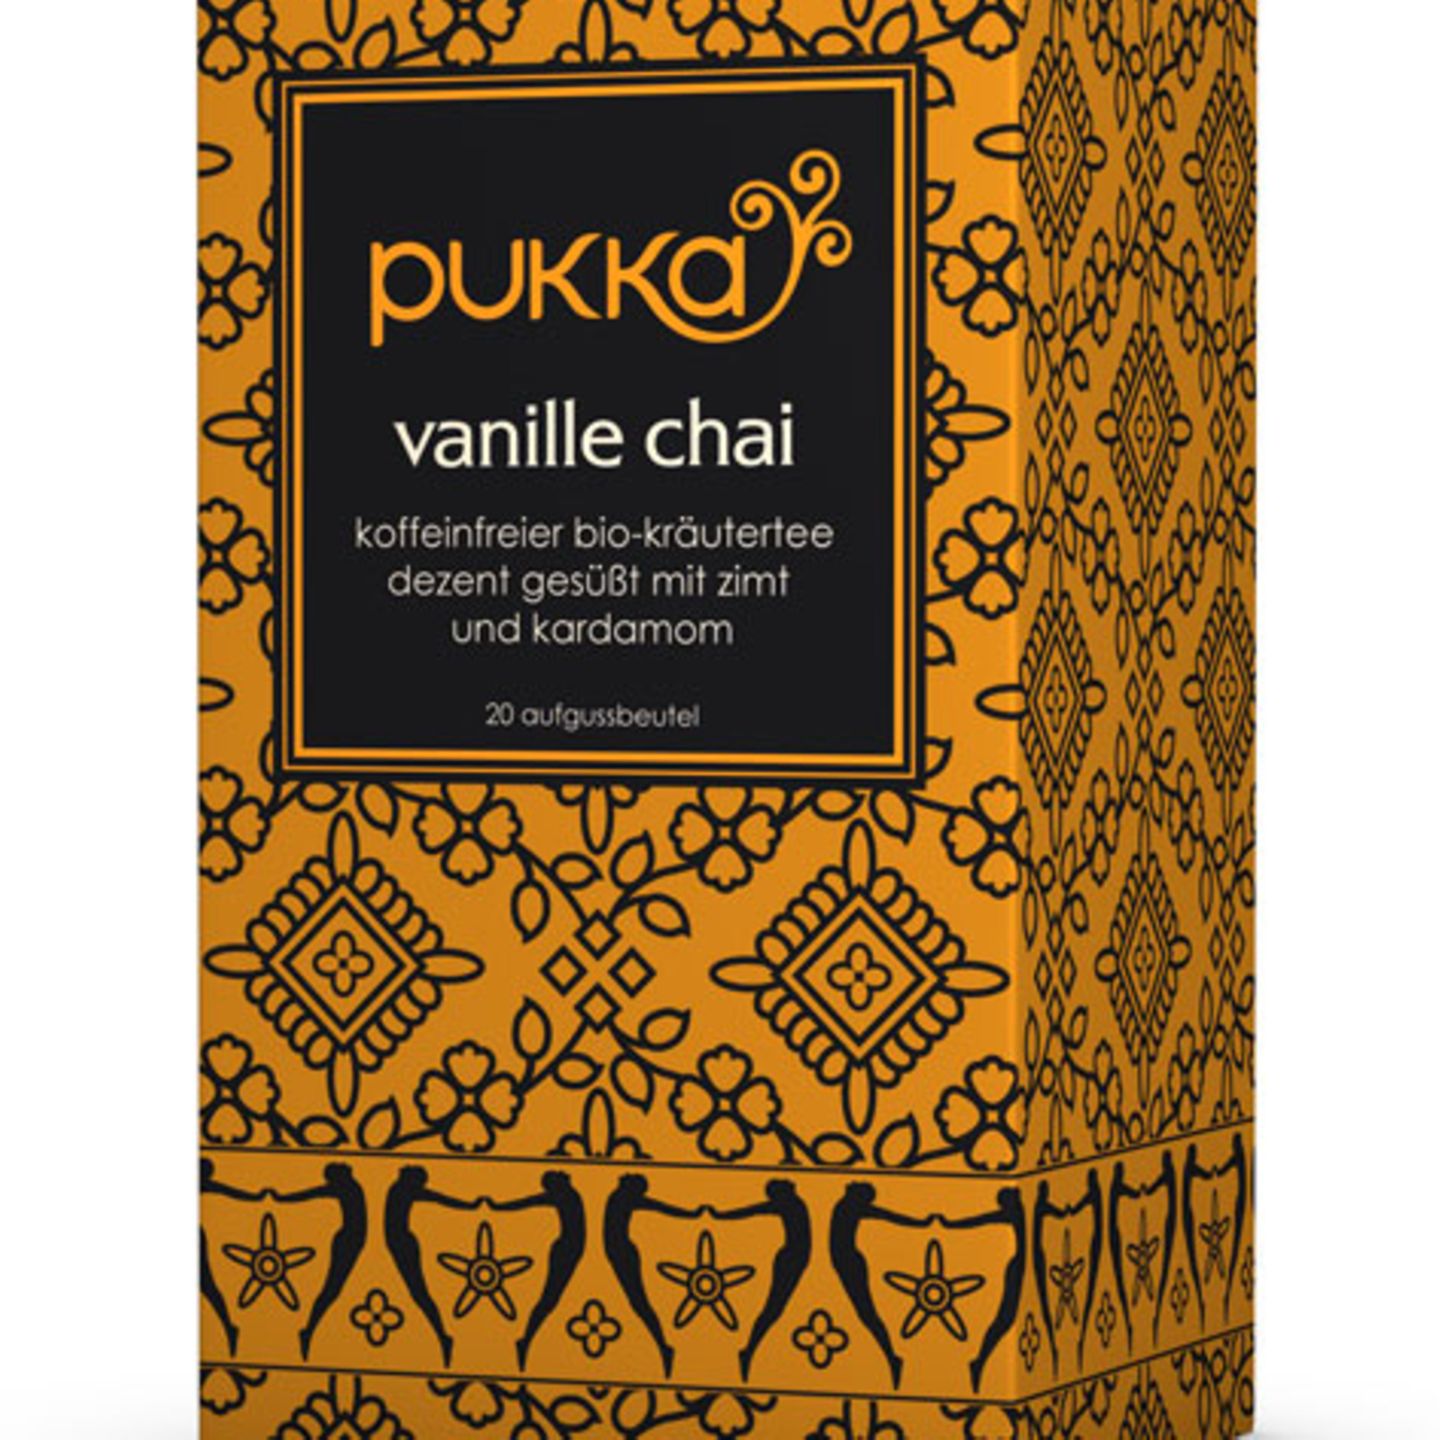 "Vanilla Chai" von PUKKA